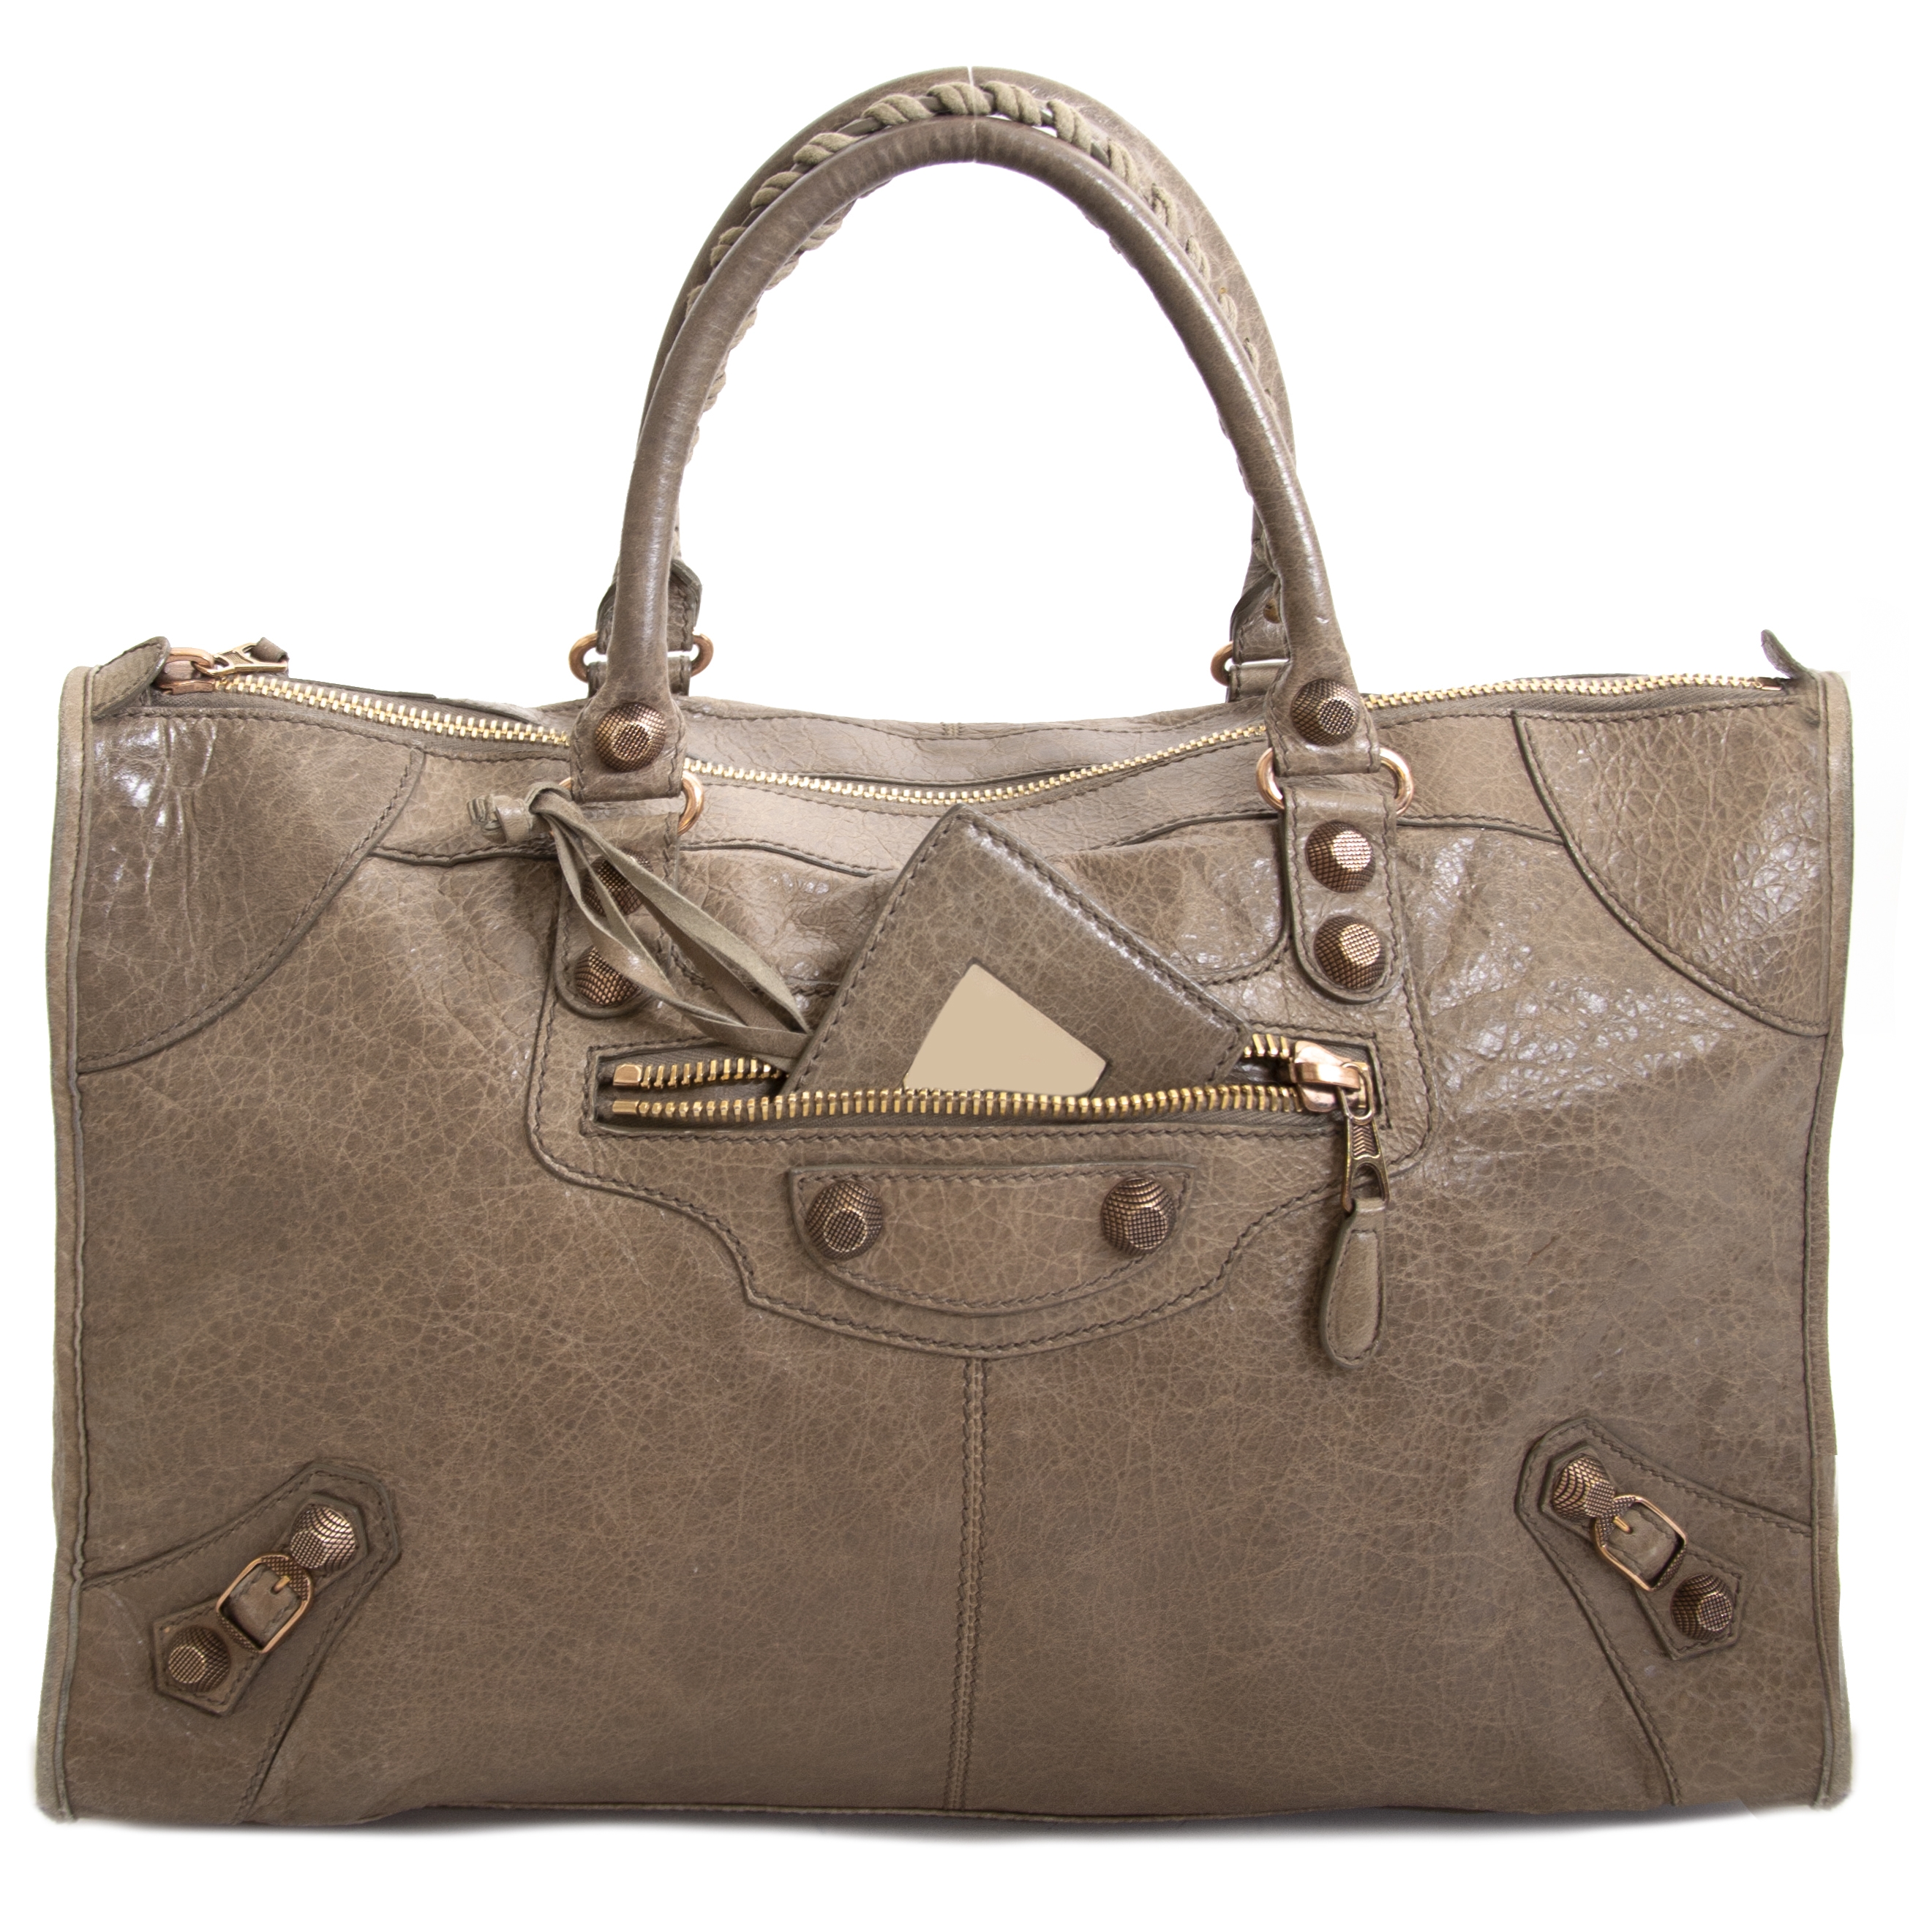 Designer Handbag Series: Balenciaga - Alberts Pawn